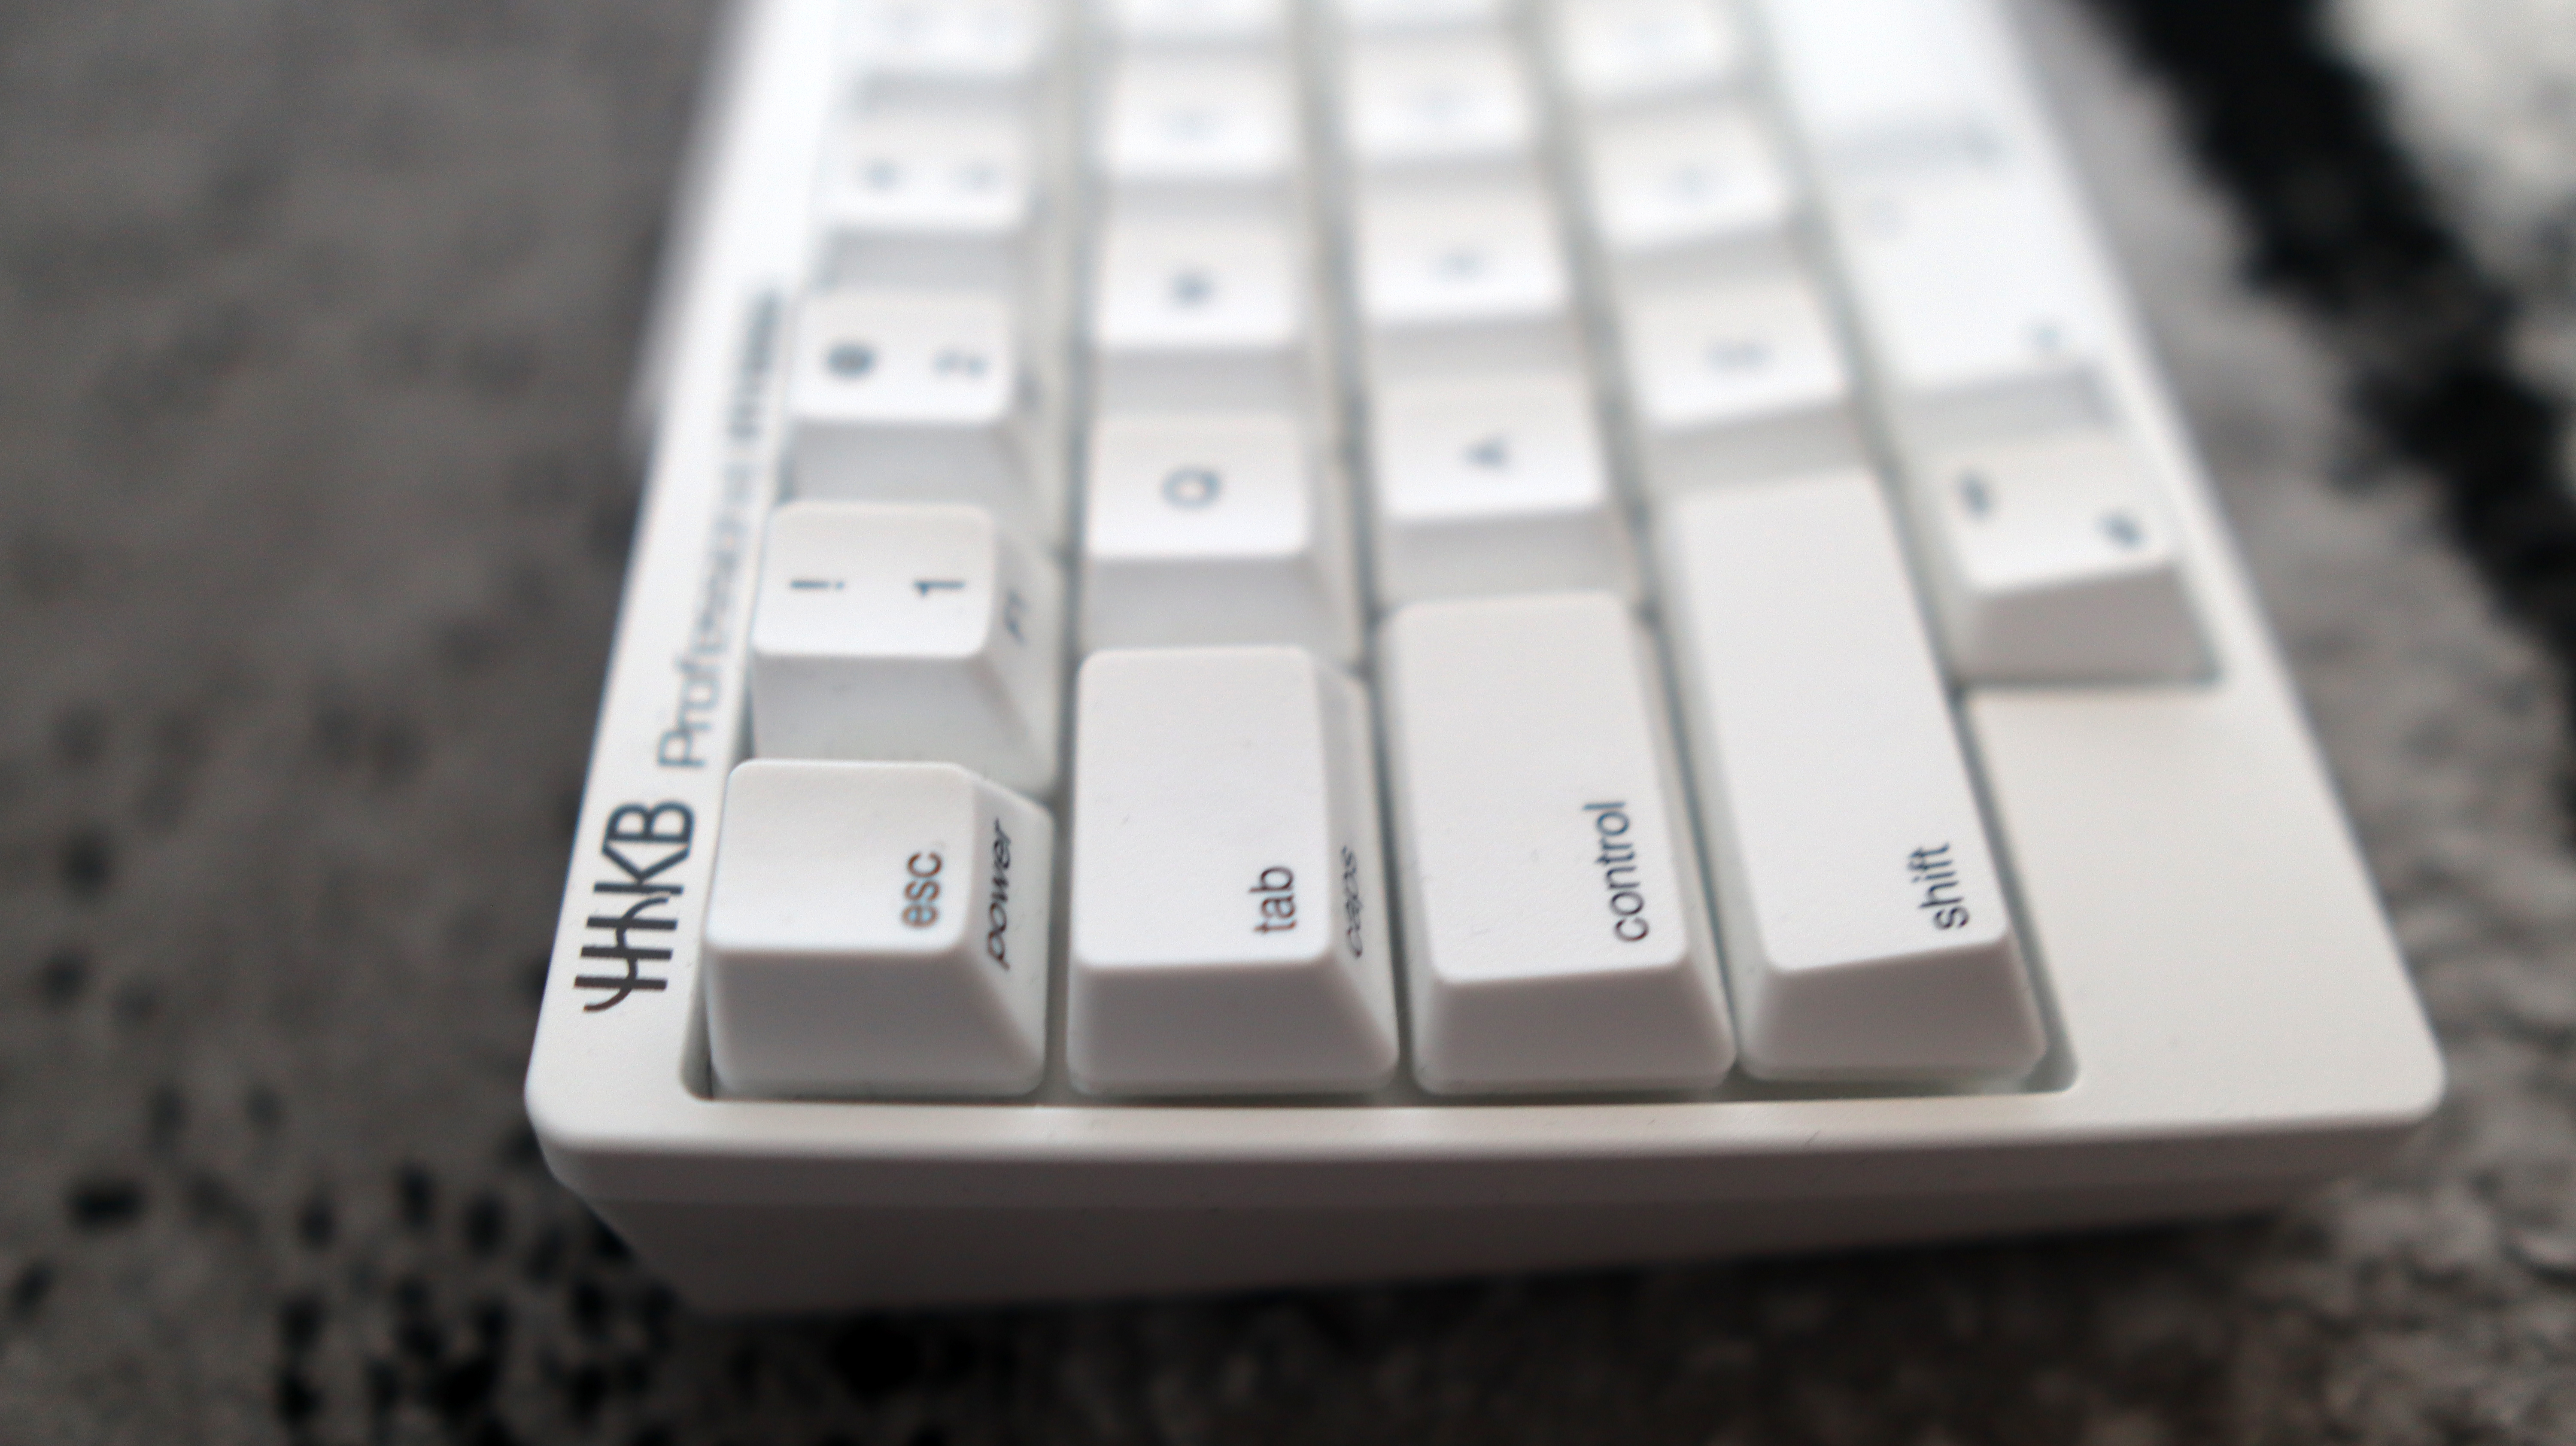 HHKB Professional Hybrid Type S keyboard on a desk